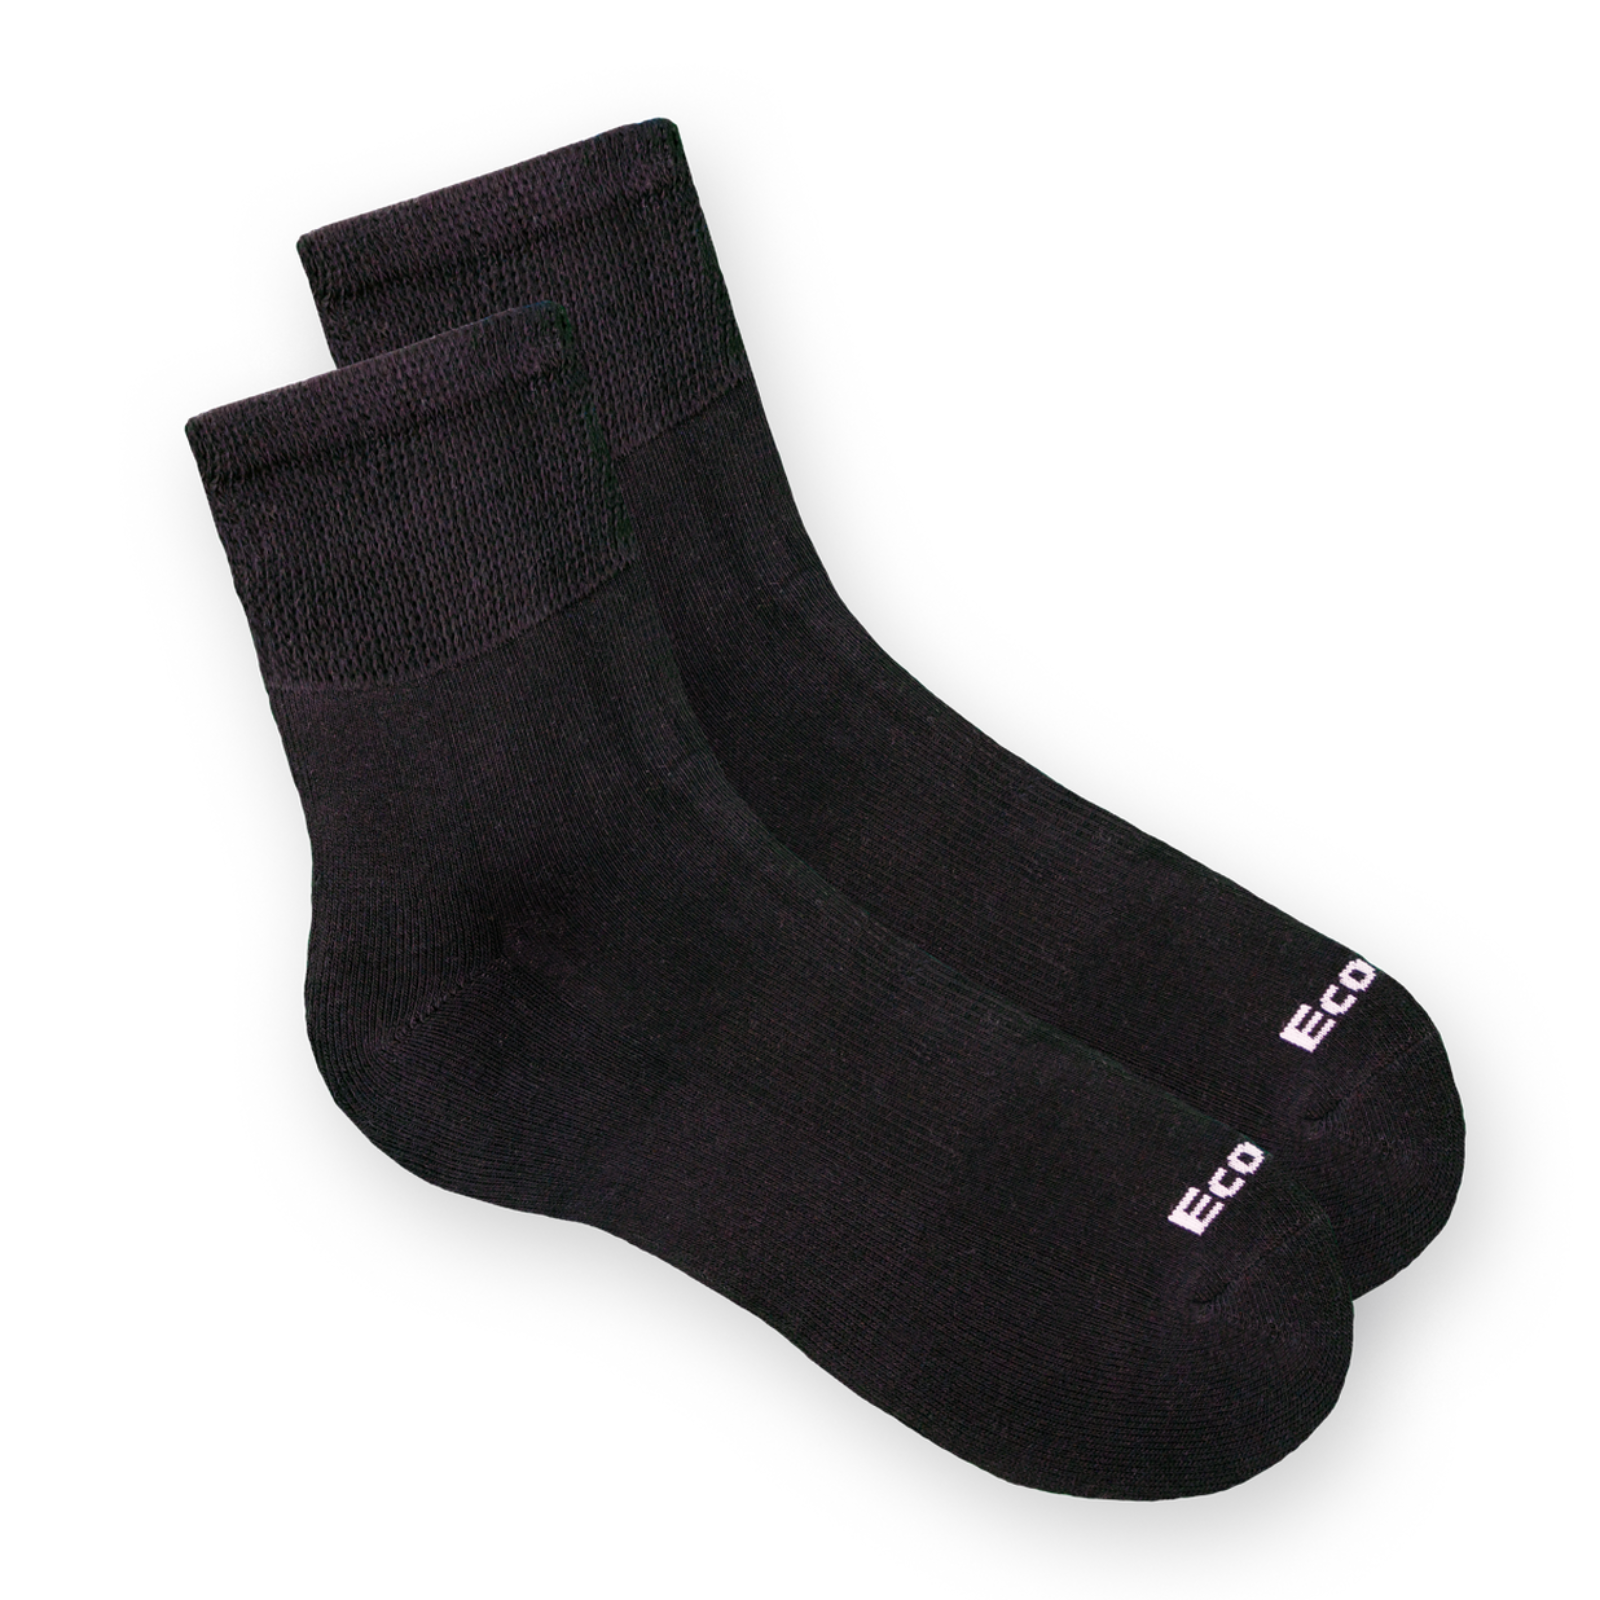 Pair of black Ecosox Diabetic Non-Binding Bamboo Quarter Height women's and men's socks